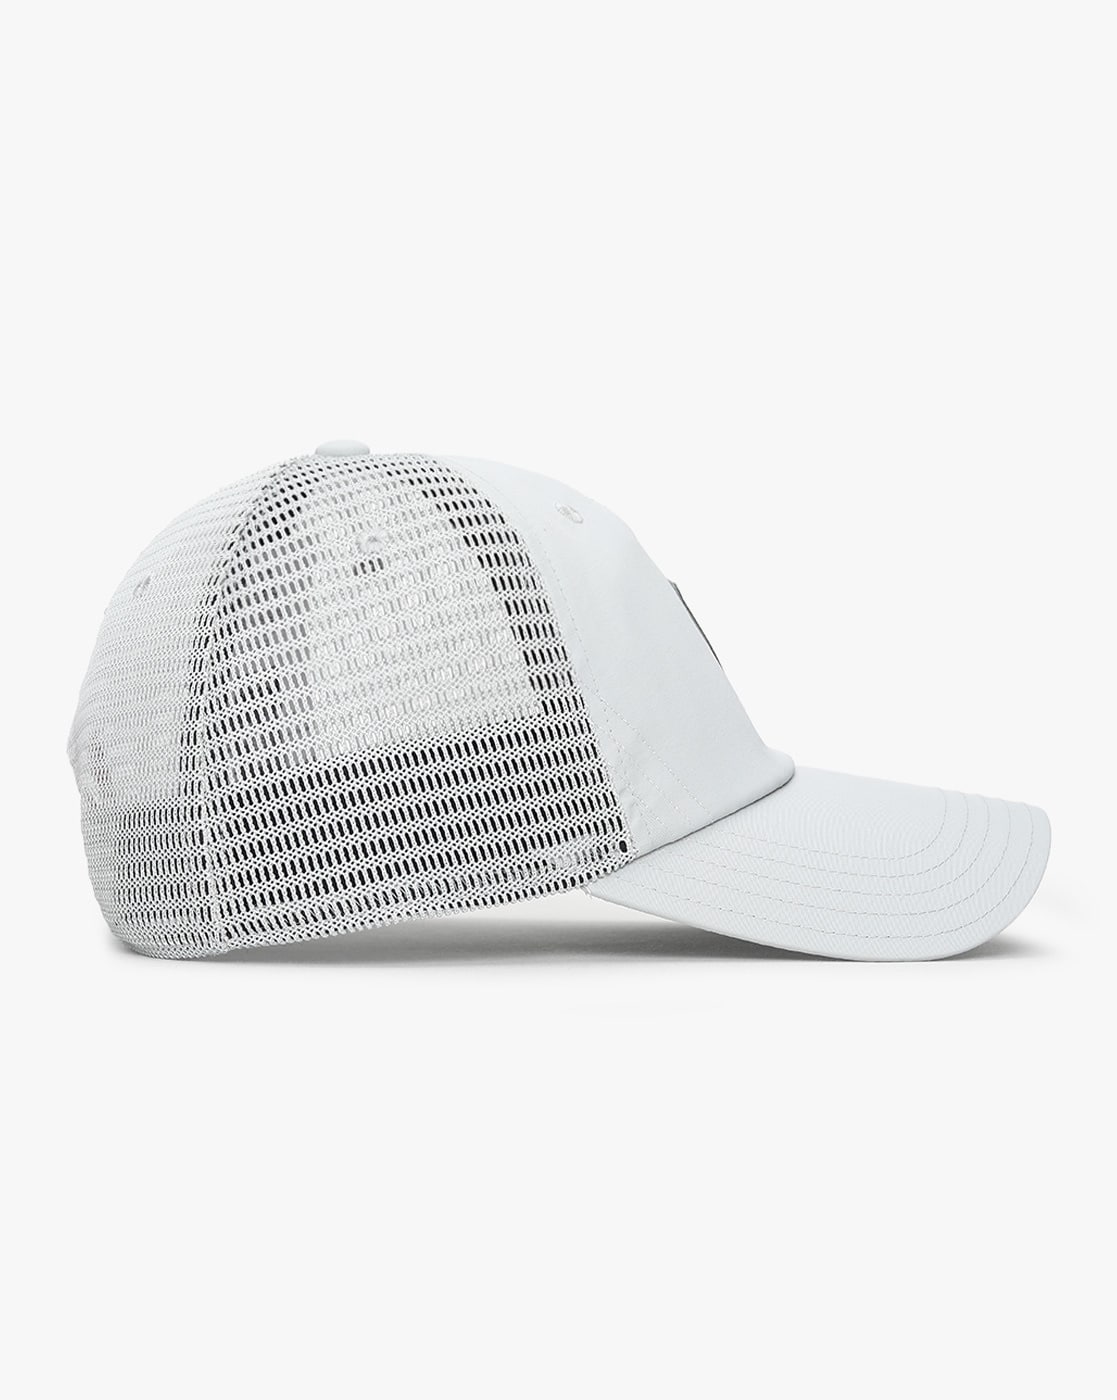 Lightweight design Headwear Shimano G.Loomis Grey/White Trucker Cap 